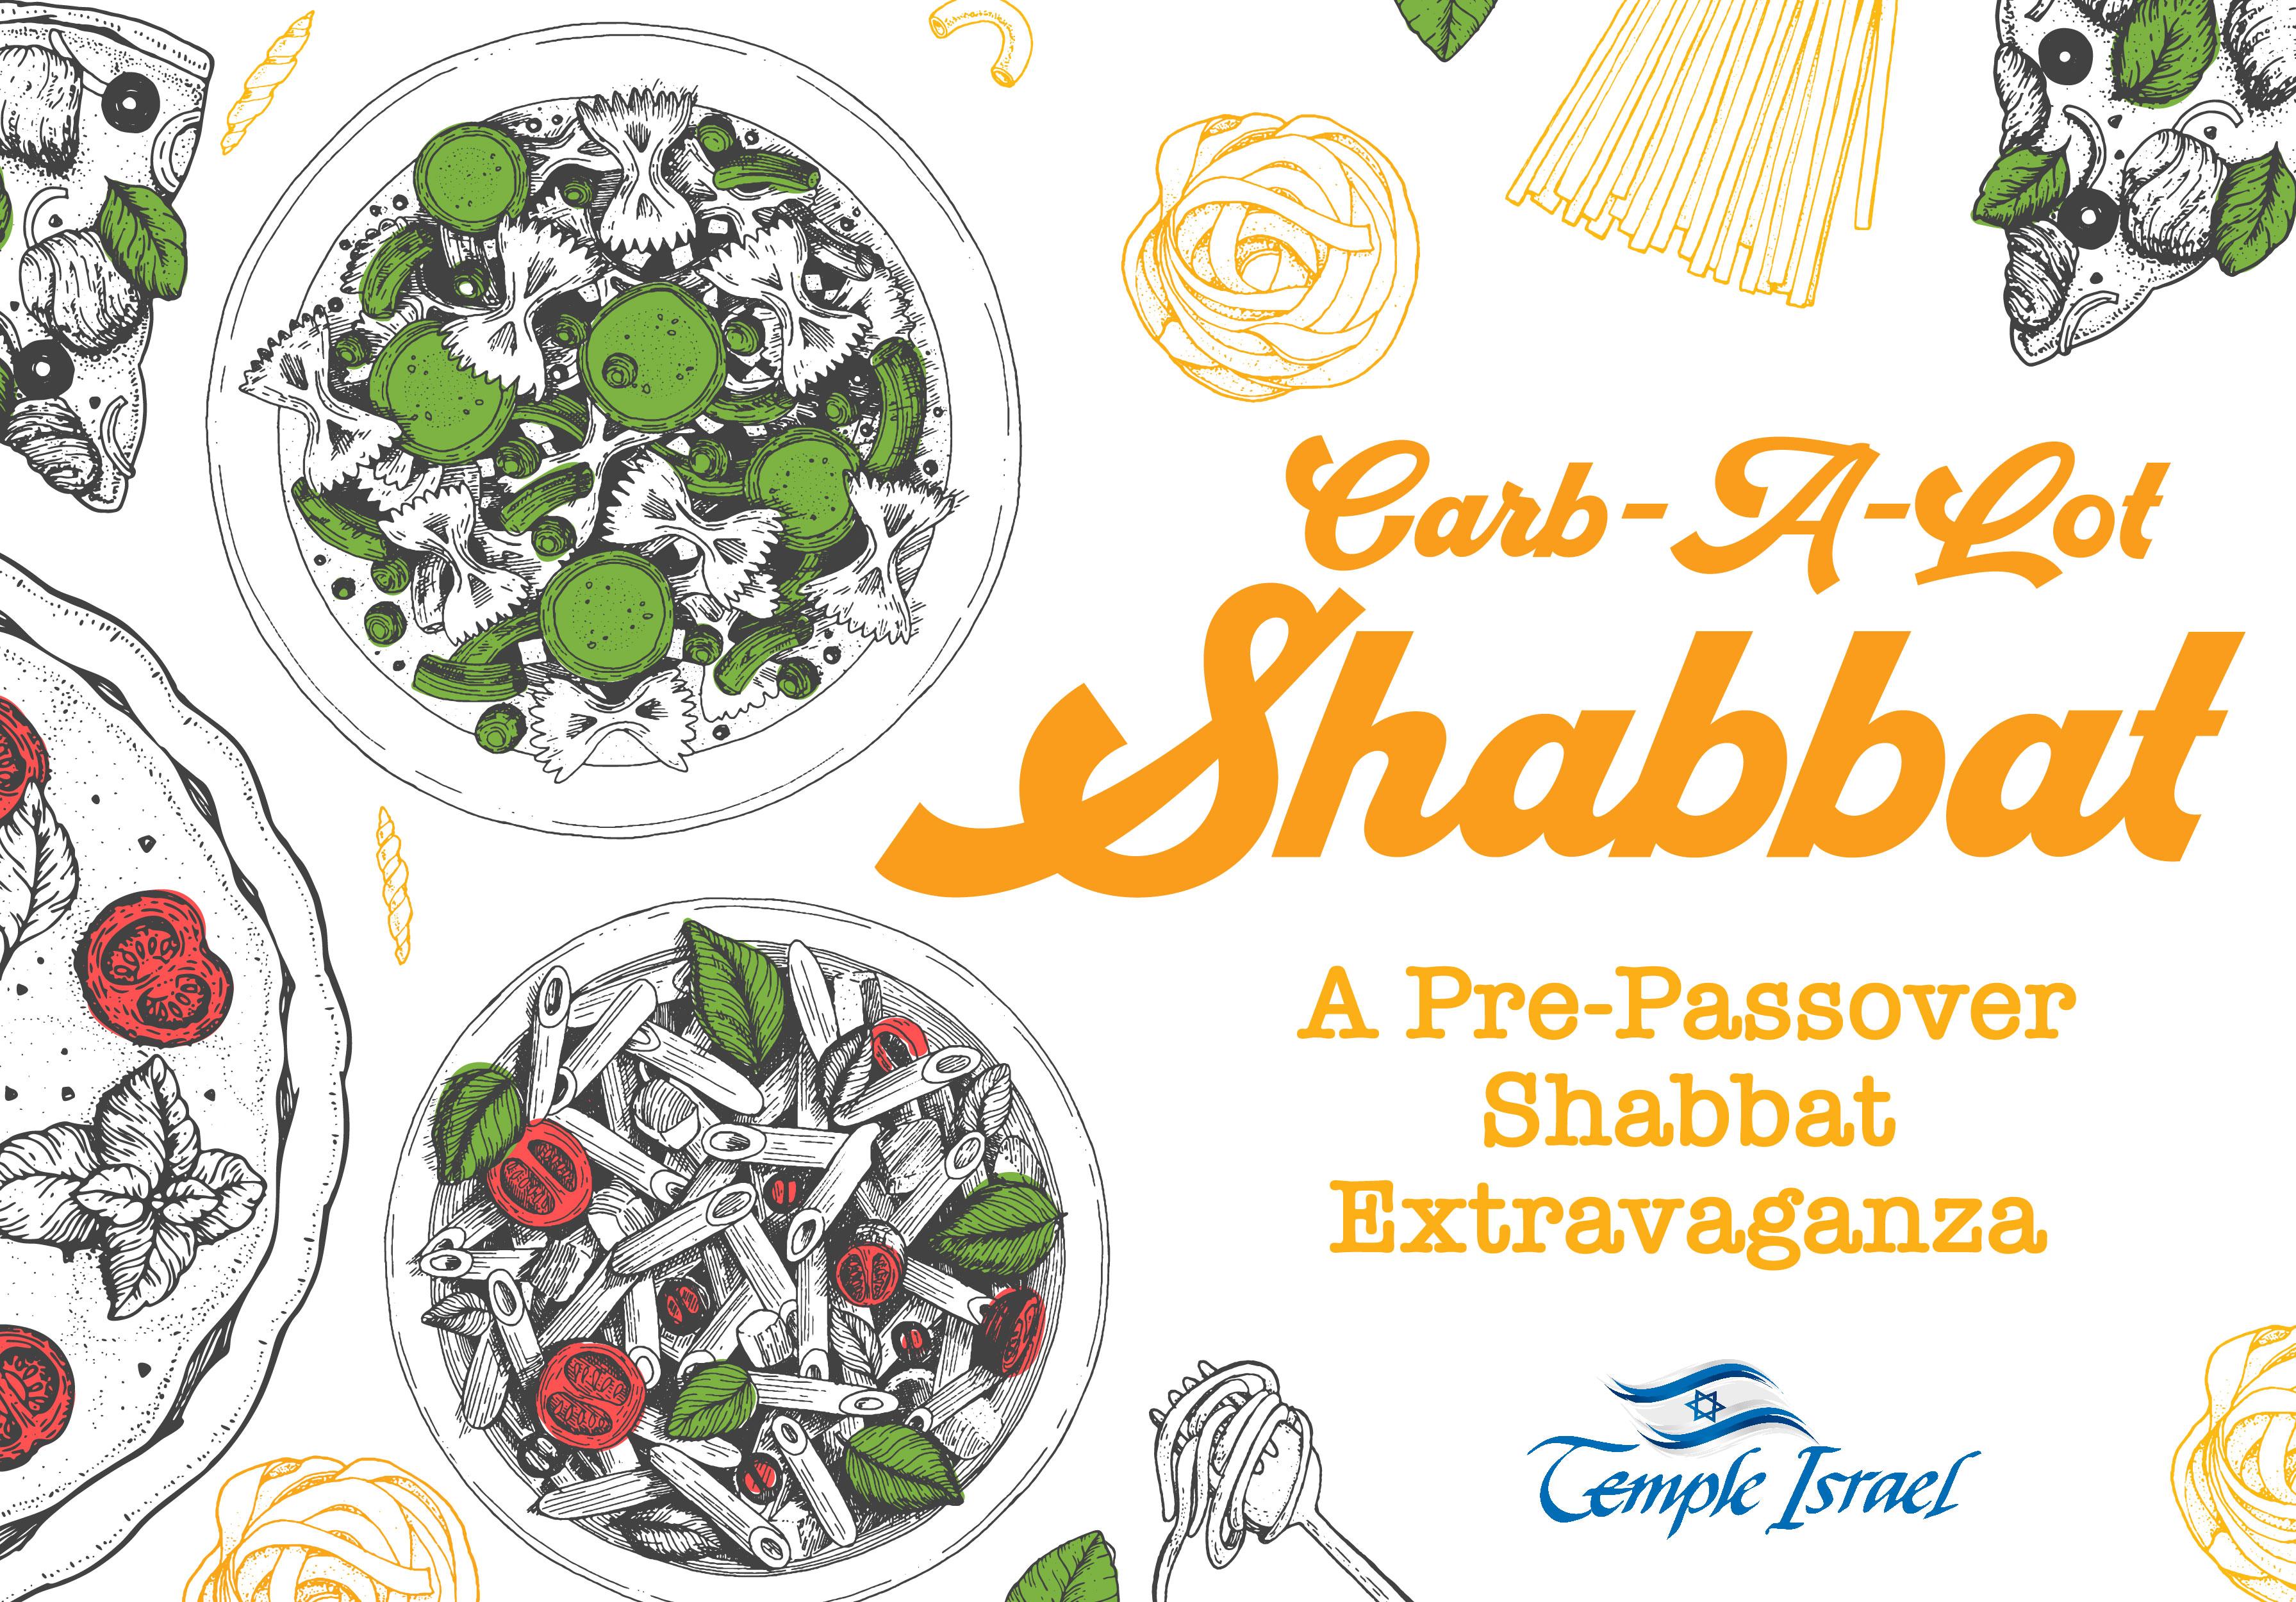 Carb-A-Lot Shabbat Congregational Dinner